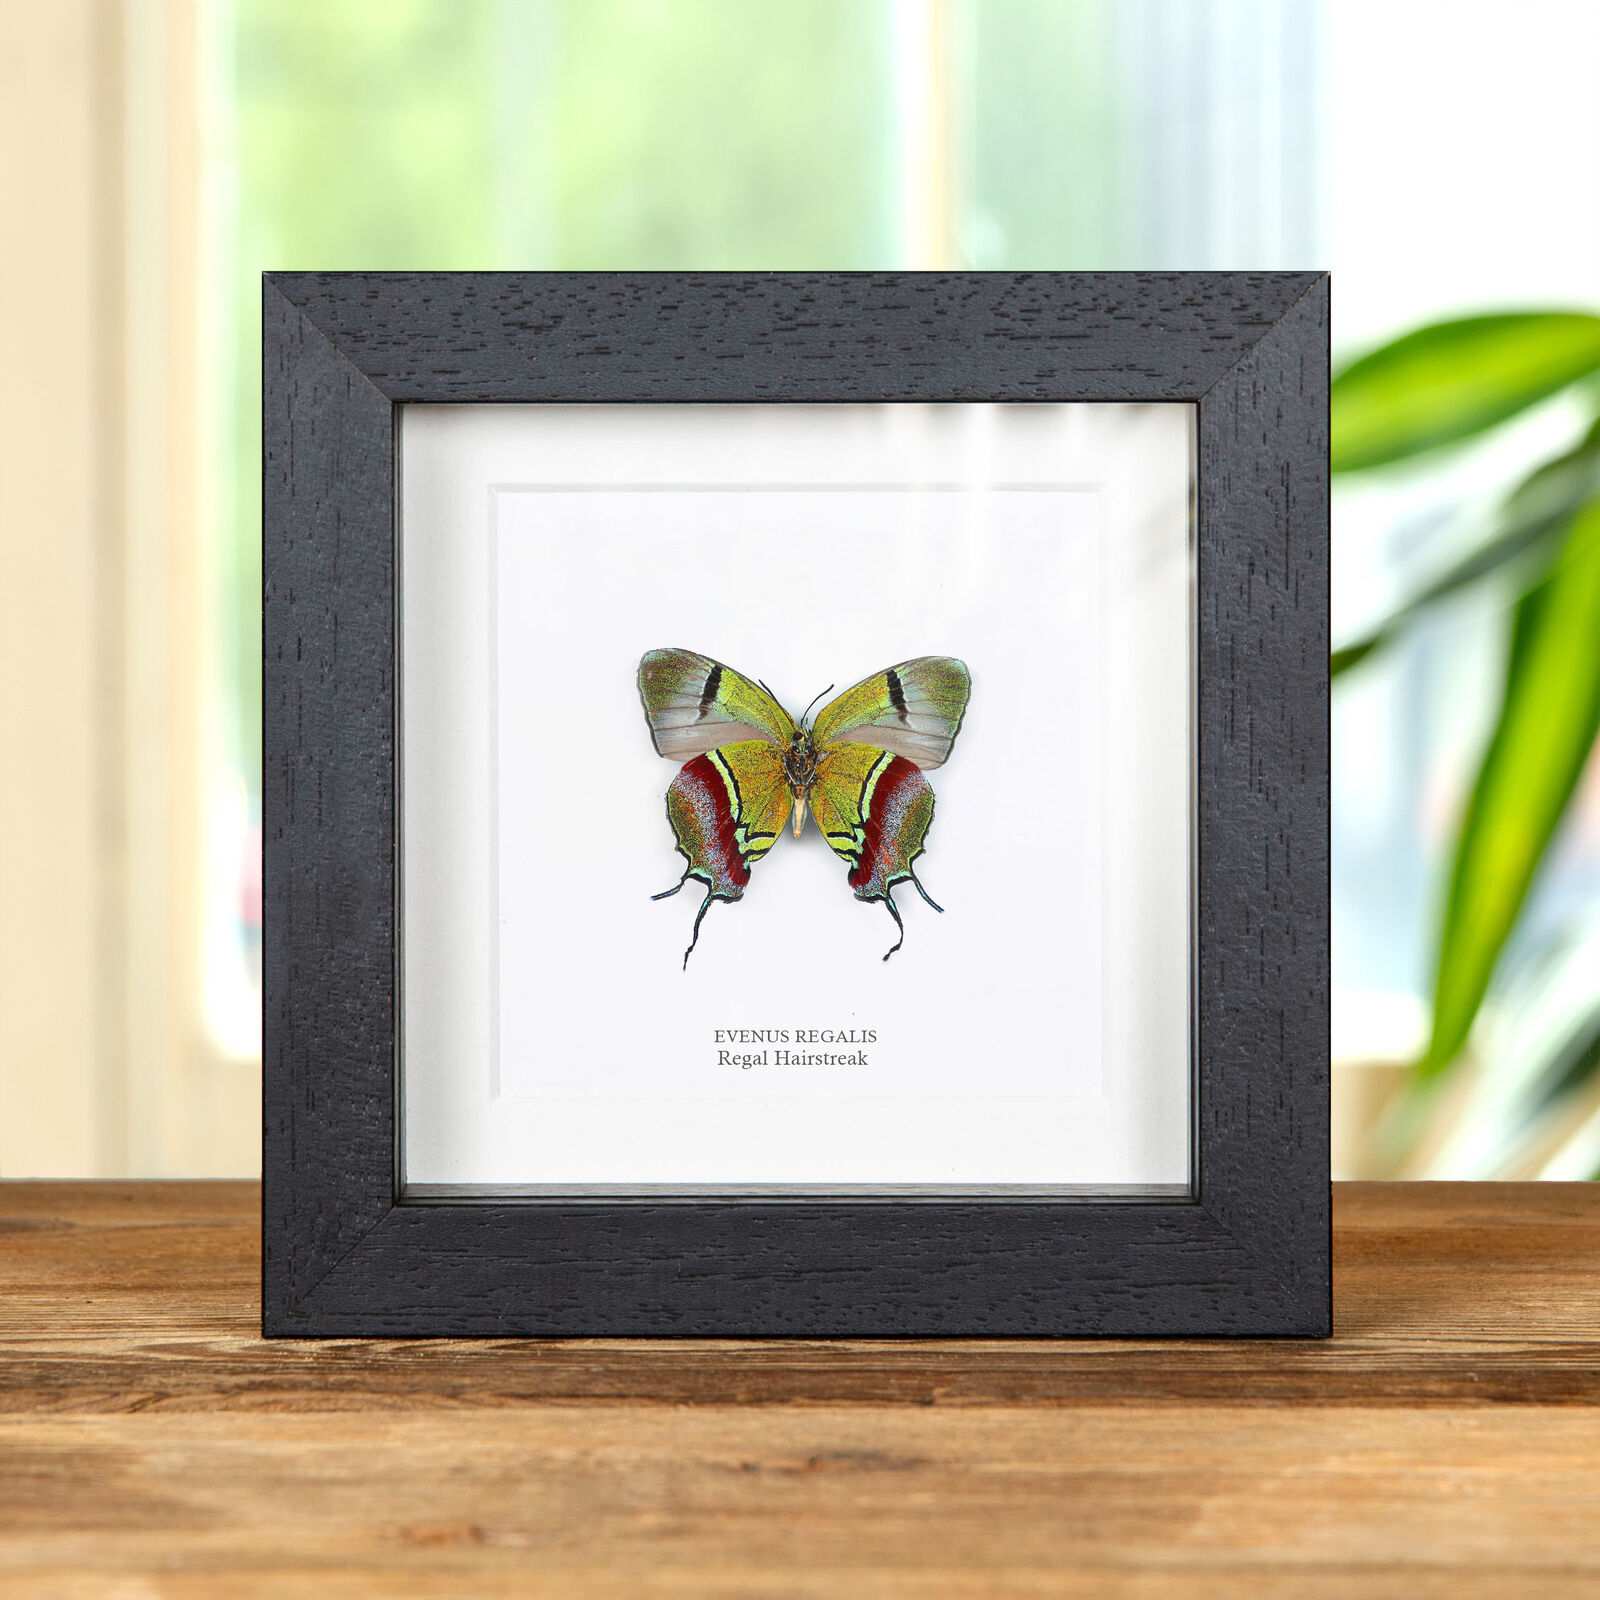 Regal Hairstreak Butterfly in Box Frame (Evenus regalis)